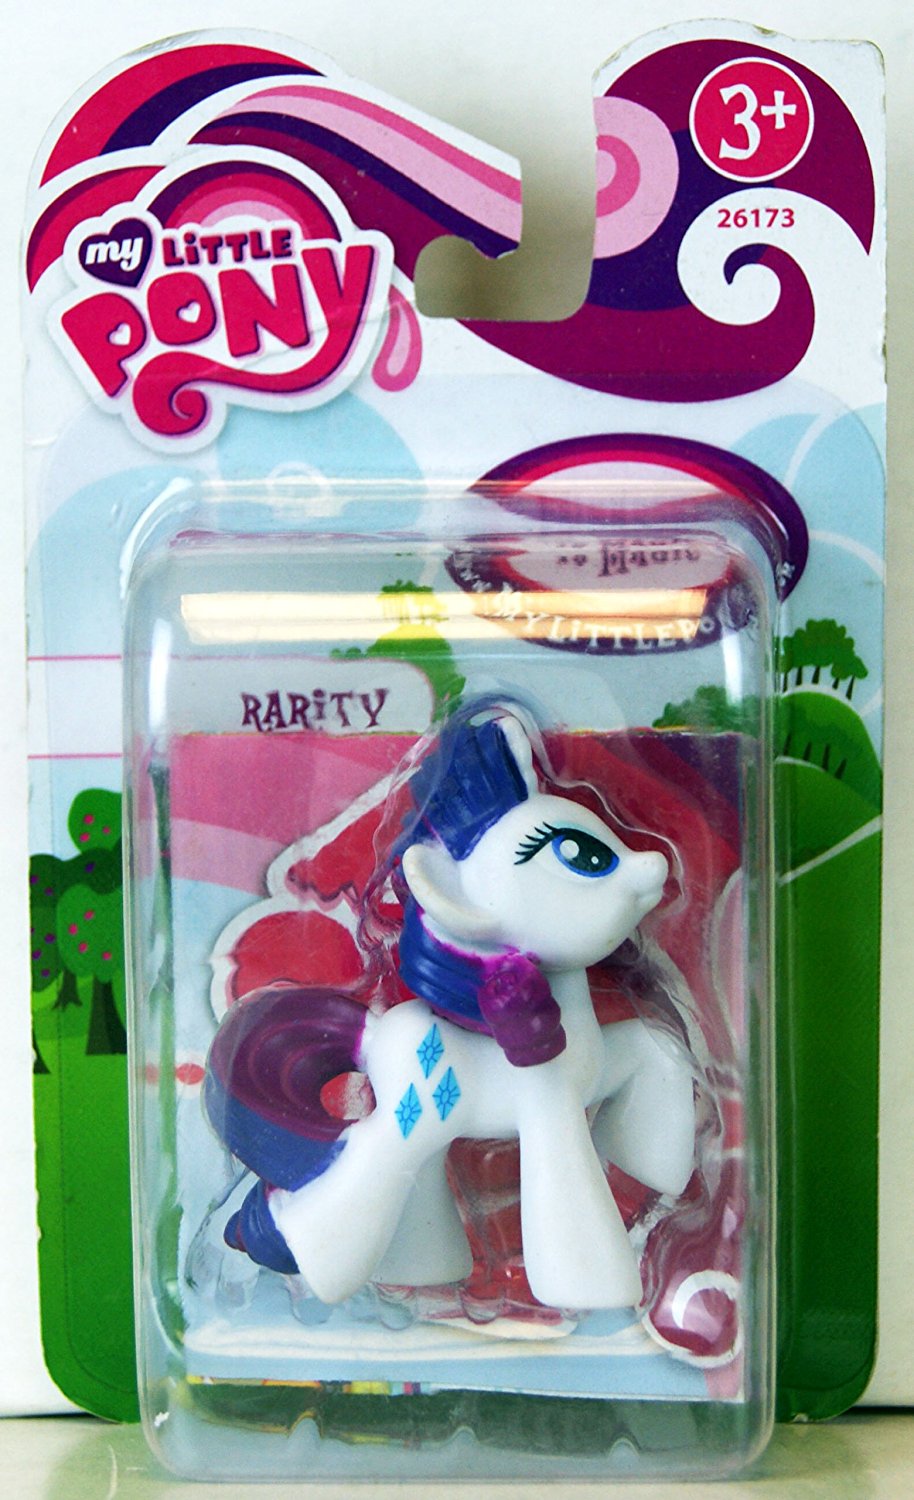 My Little Pony - 26173 FRiENDSHiP iS MAGiC Mini-Pony Rarity  ca. 5cm